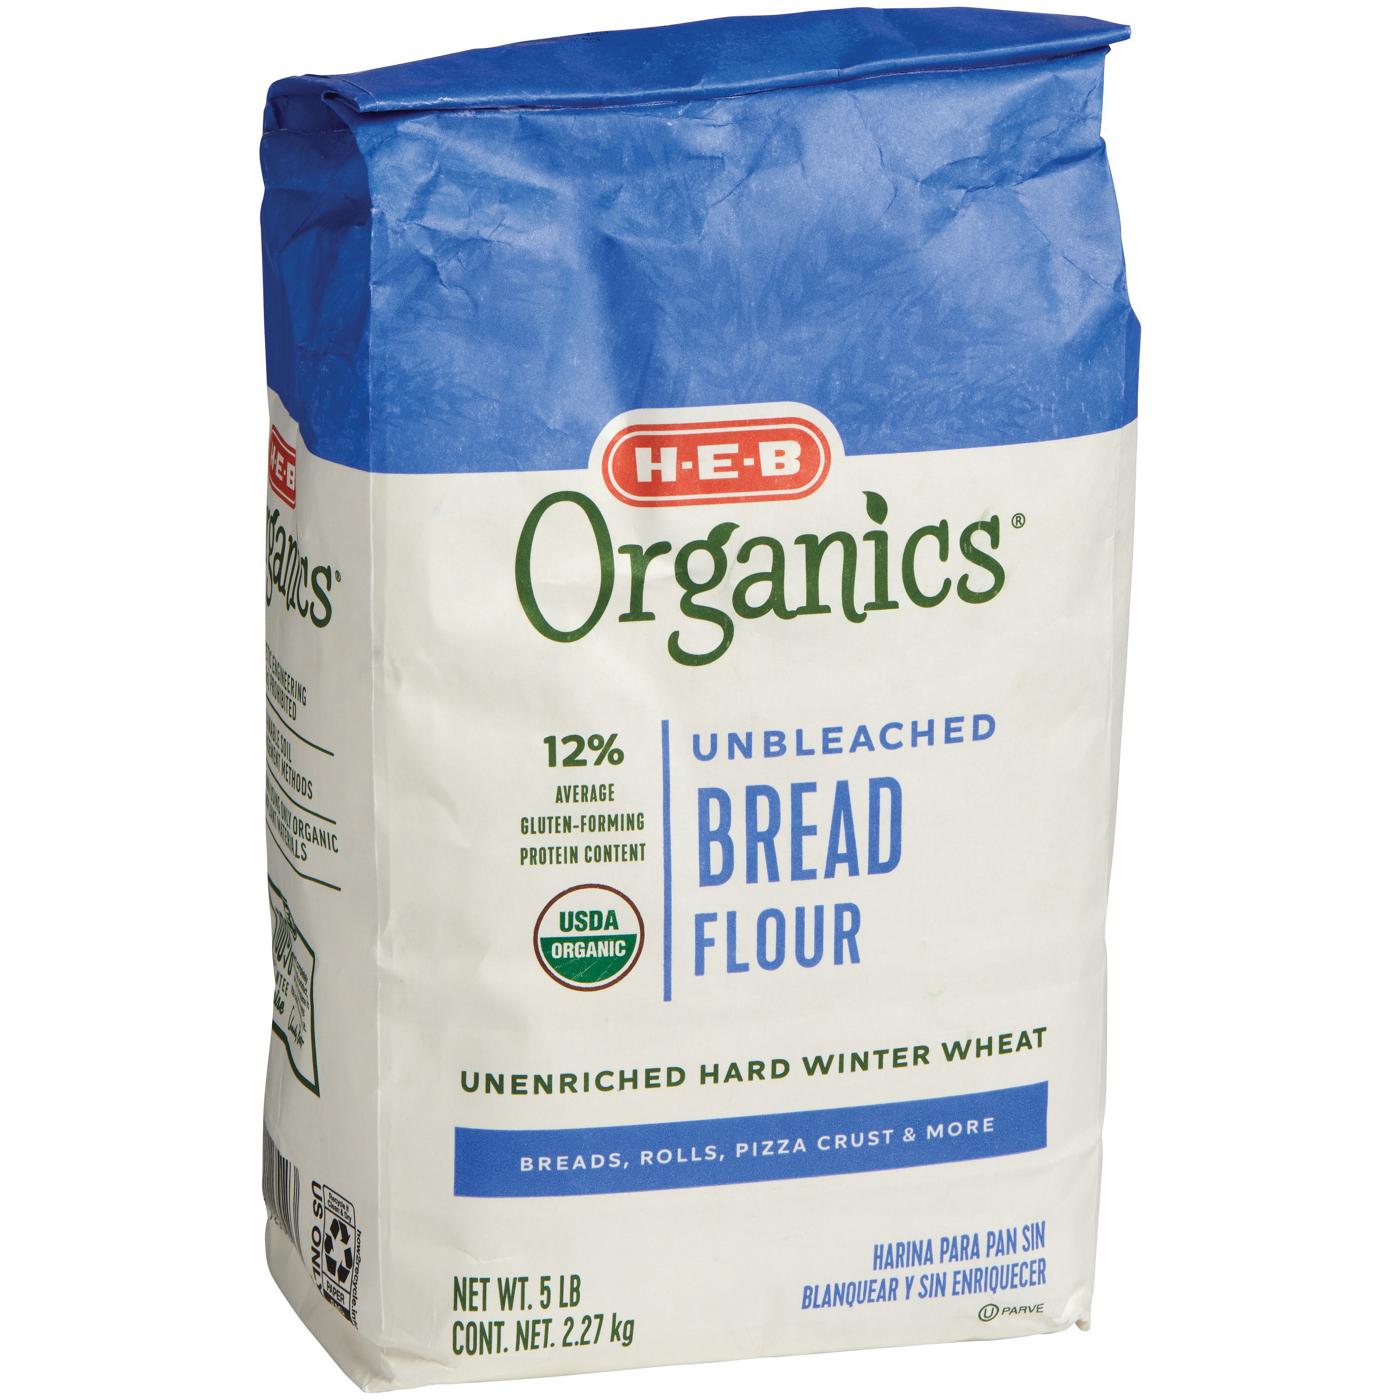 H-E-B Organics Unbleached Bread Flour; image 2 of 2